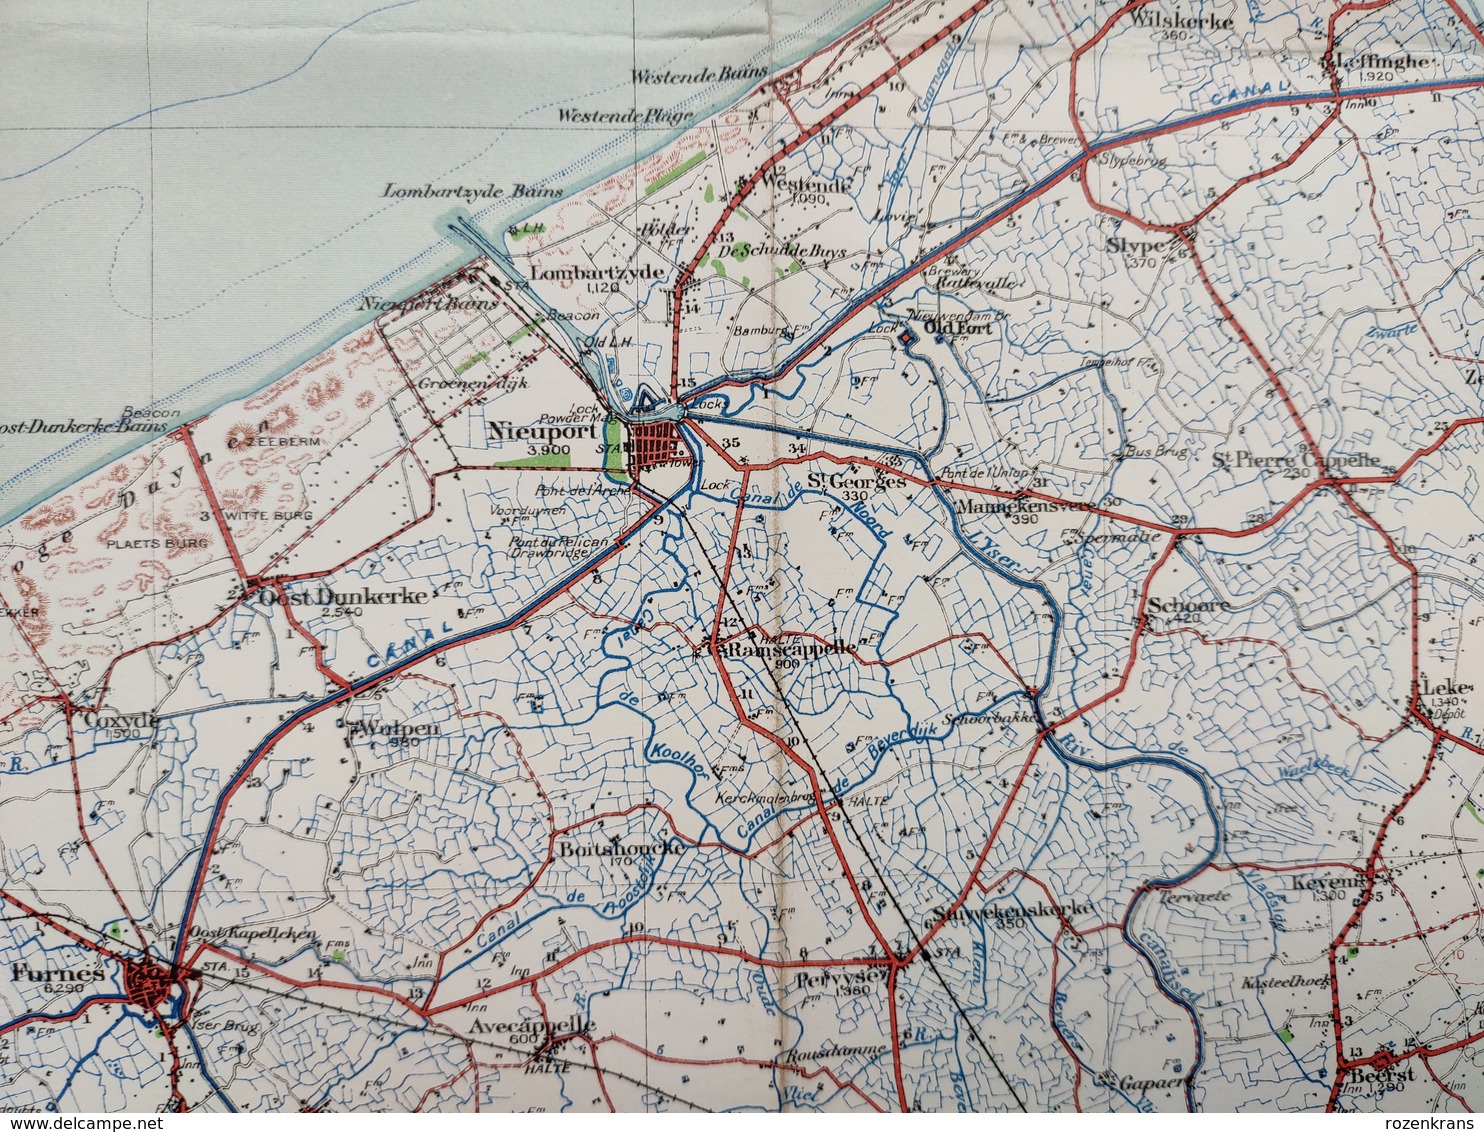 Carte Topographique Militaire UK War Office 1917 World War 1 WW1 Dunkerque Oostende Nieuwpoort De Panne Veurne Diksmuide - Cartes Topographiques